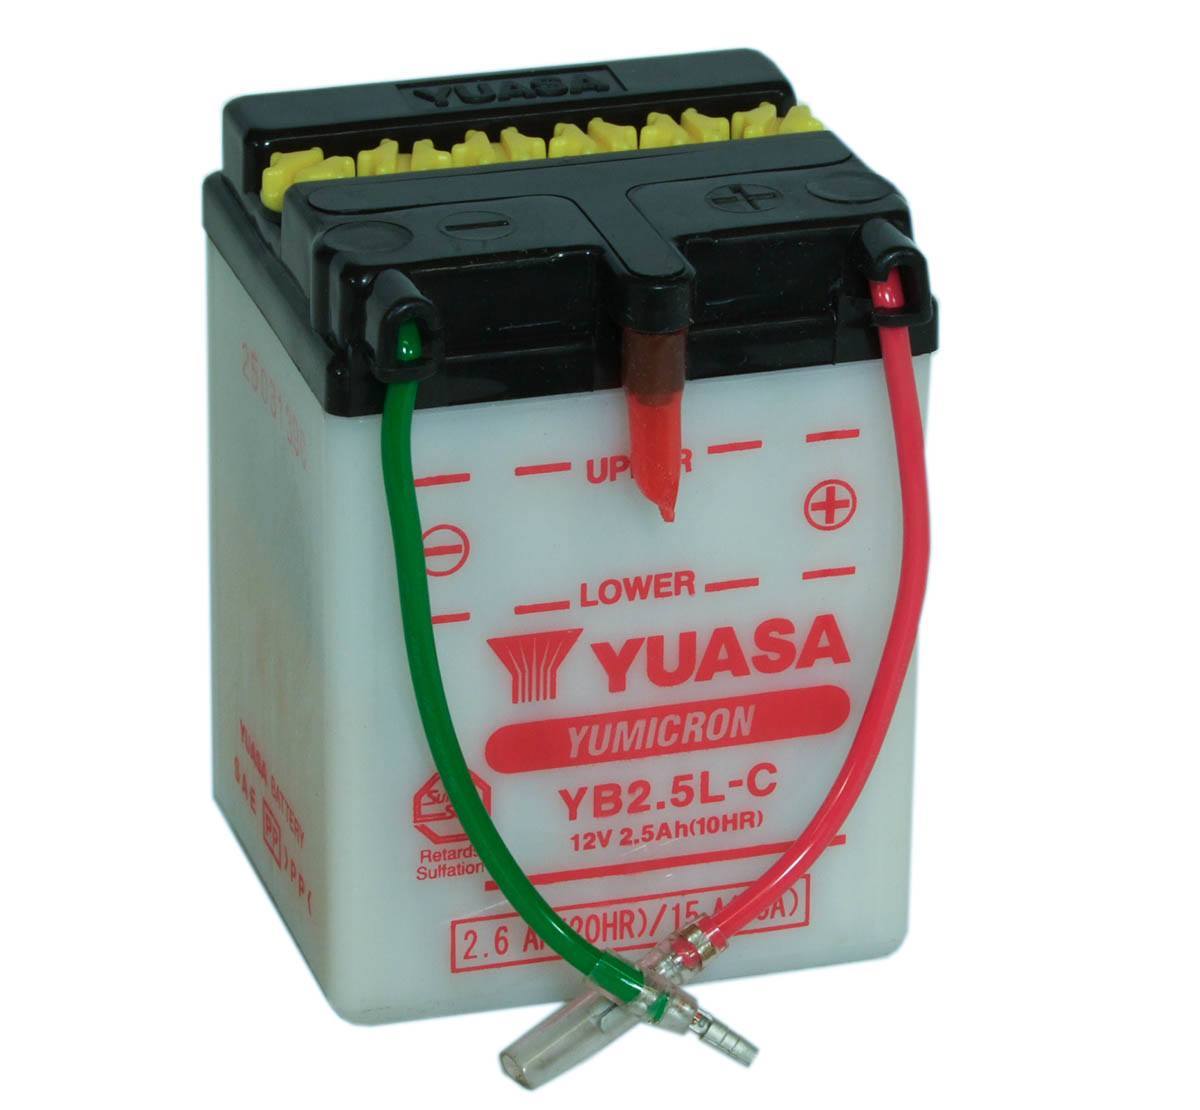 Yuasa YB2.5L-C 12V Motorcycle Battery